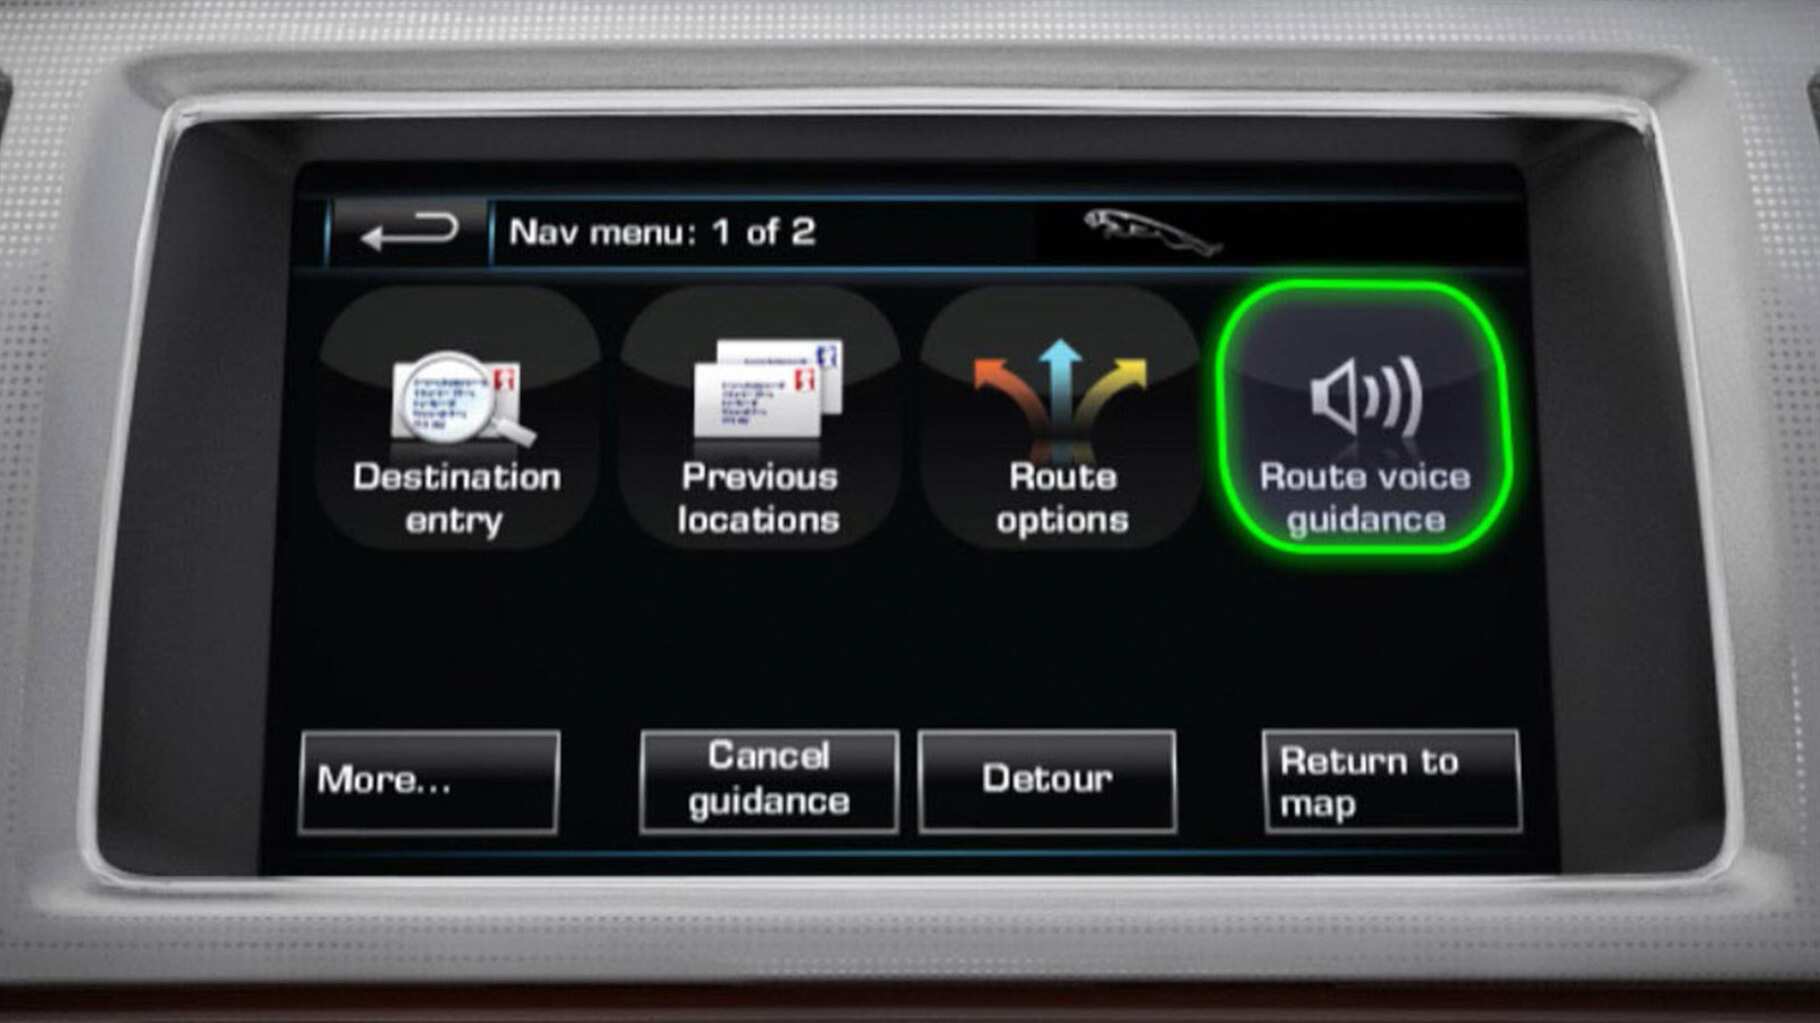 Jaguar XF 2012 Voice Guidance